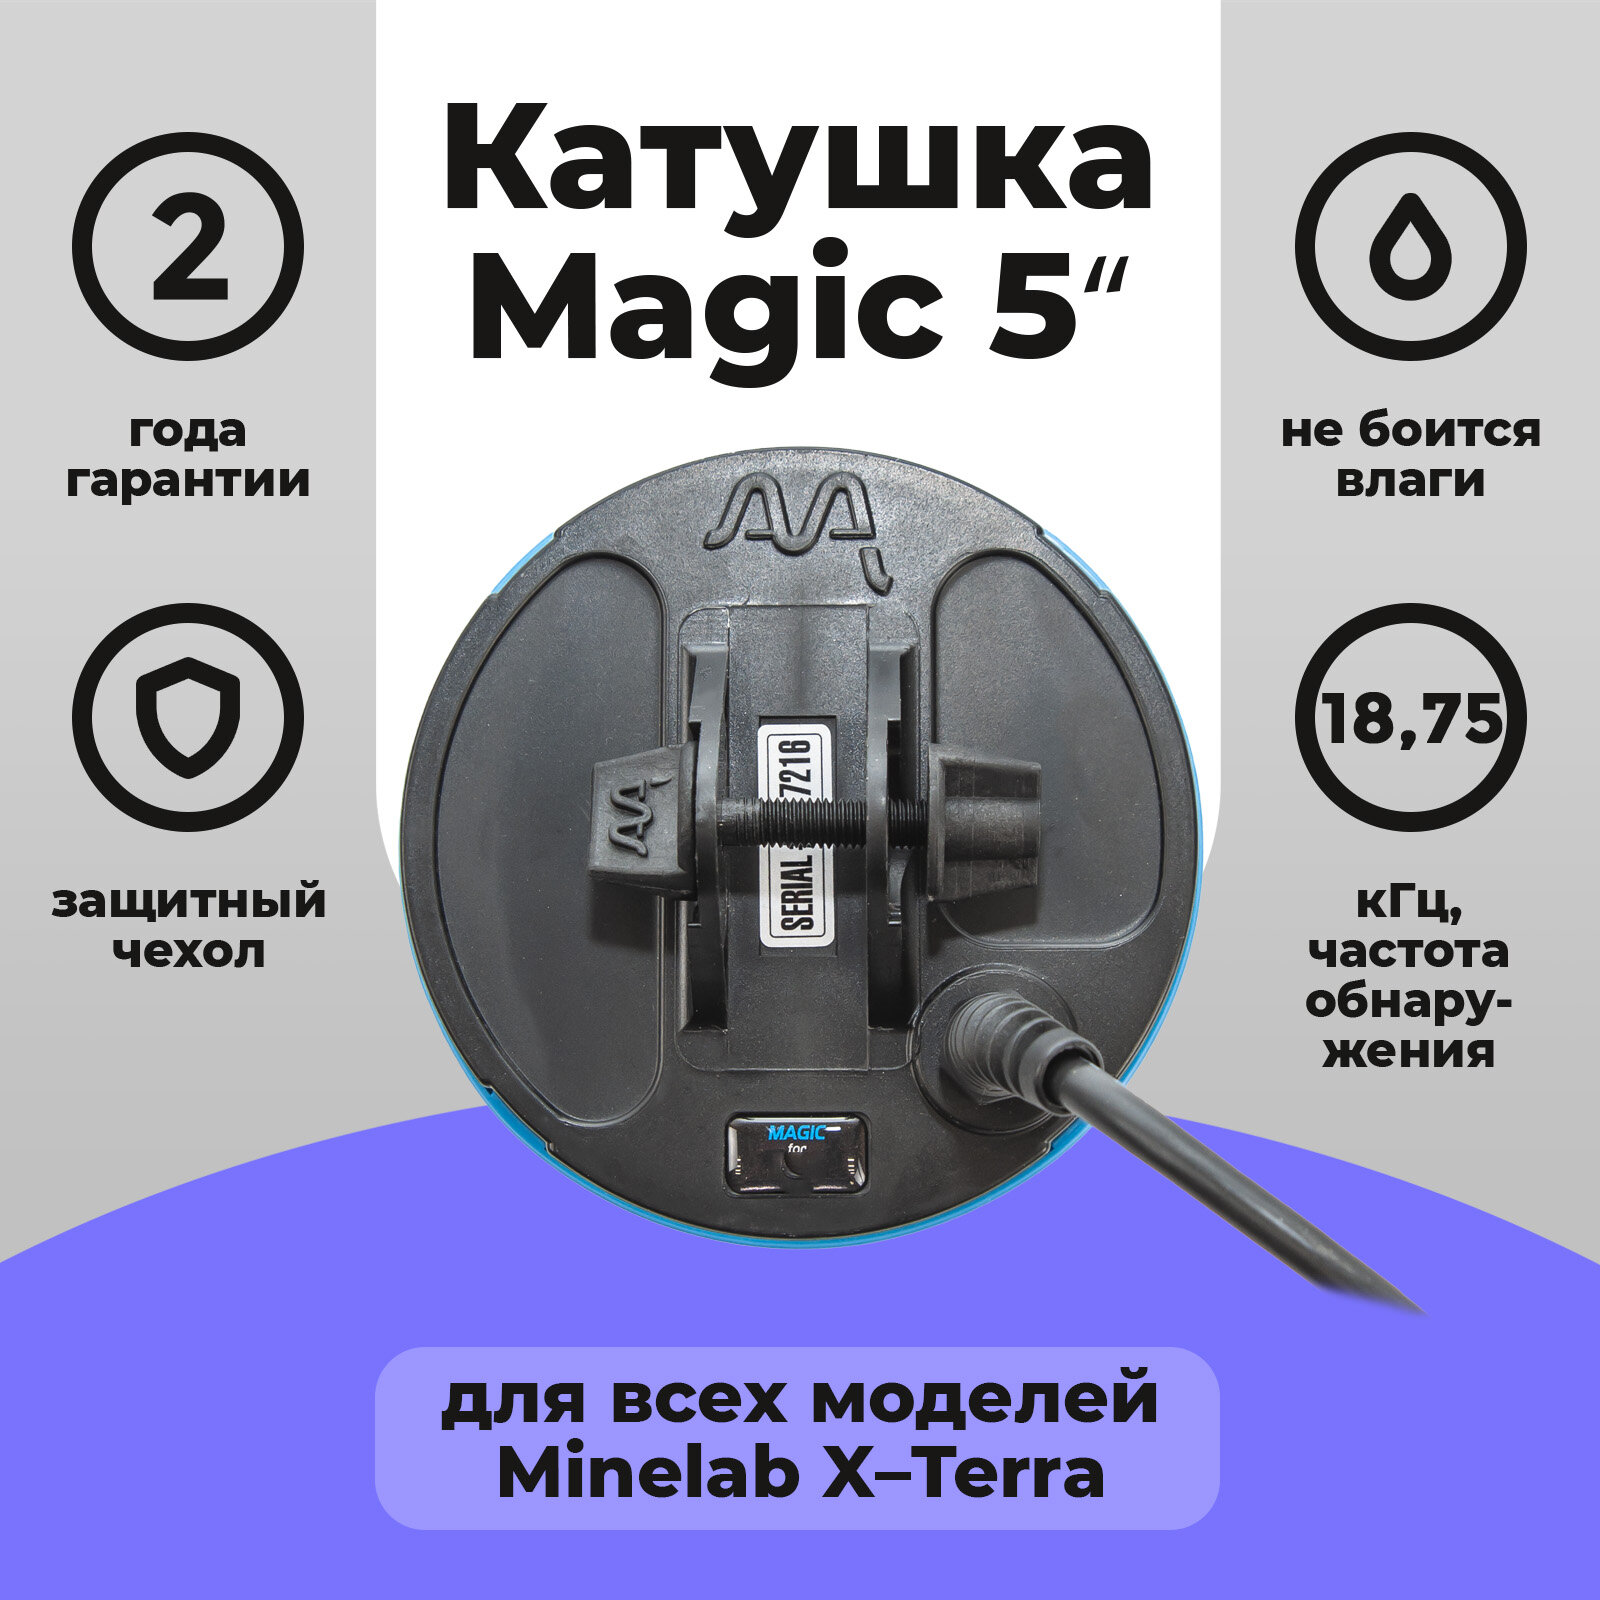 Катушка Magic 5 для X-Terra 18,75 кГц